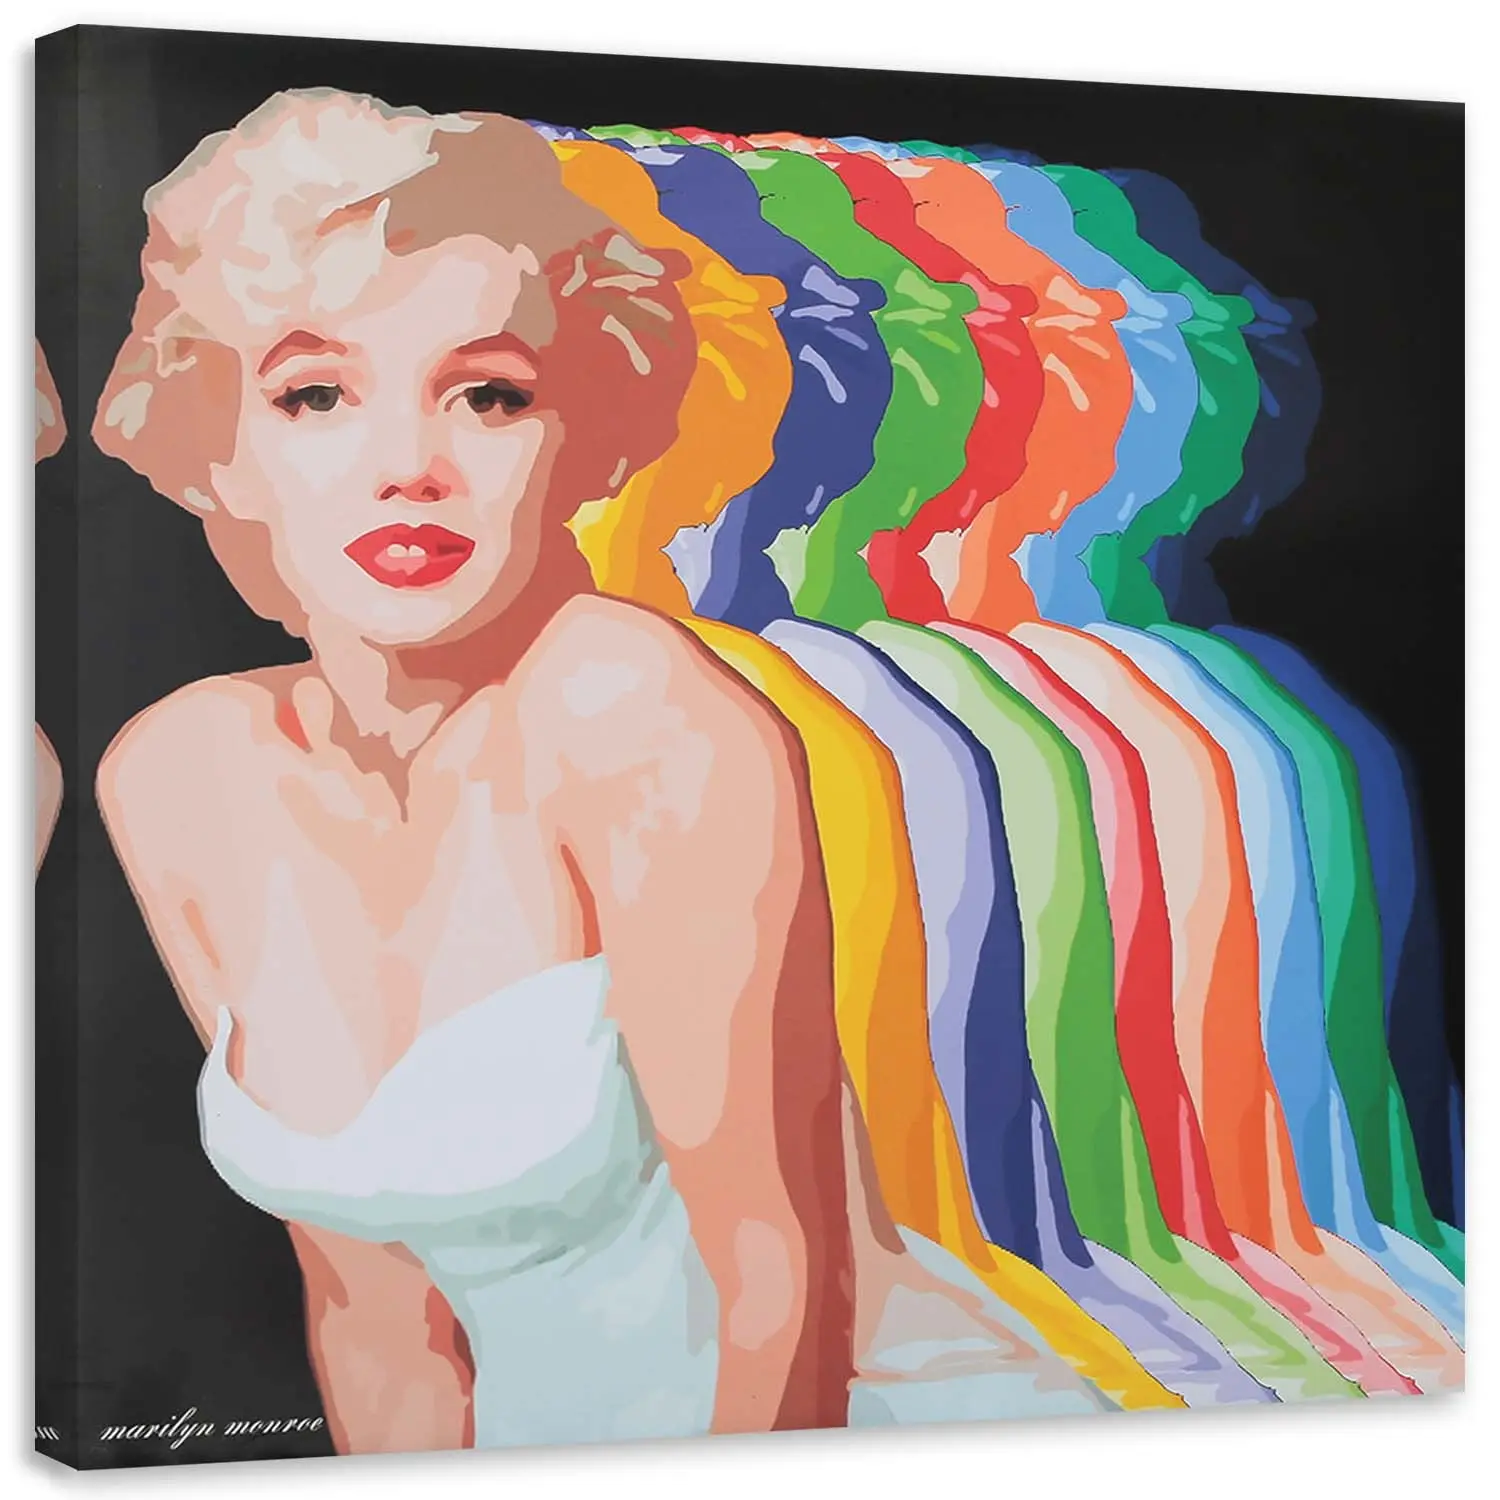 Marilyn Pop Wandbild Bunt Monroe art